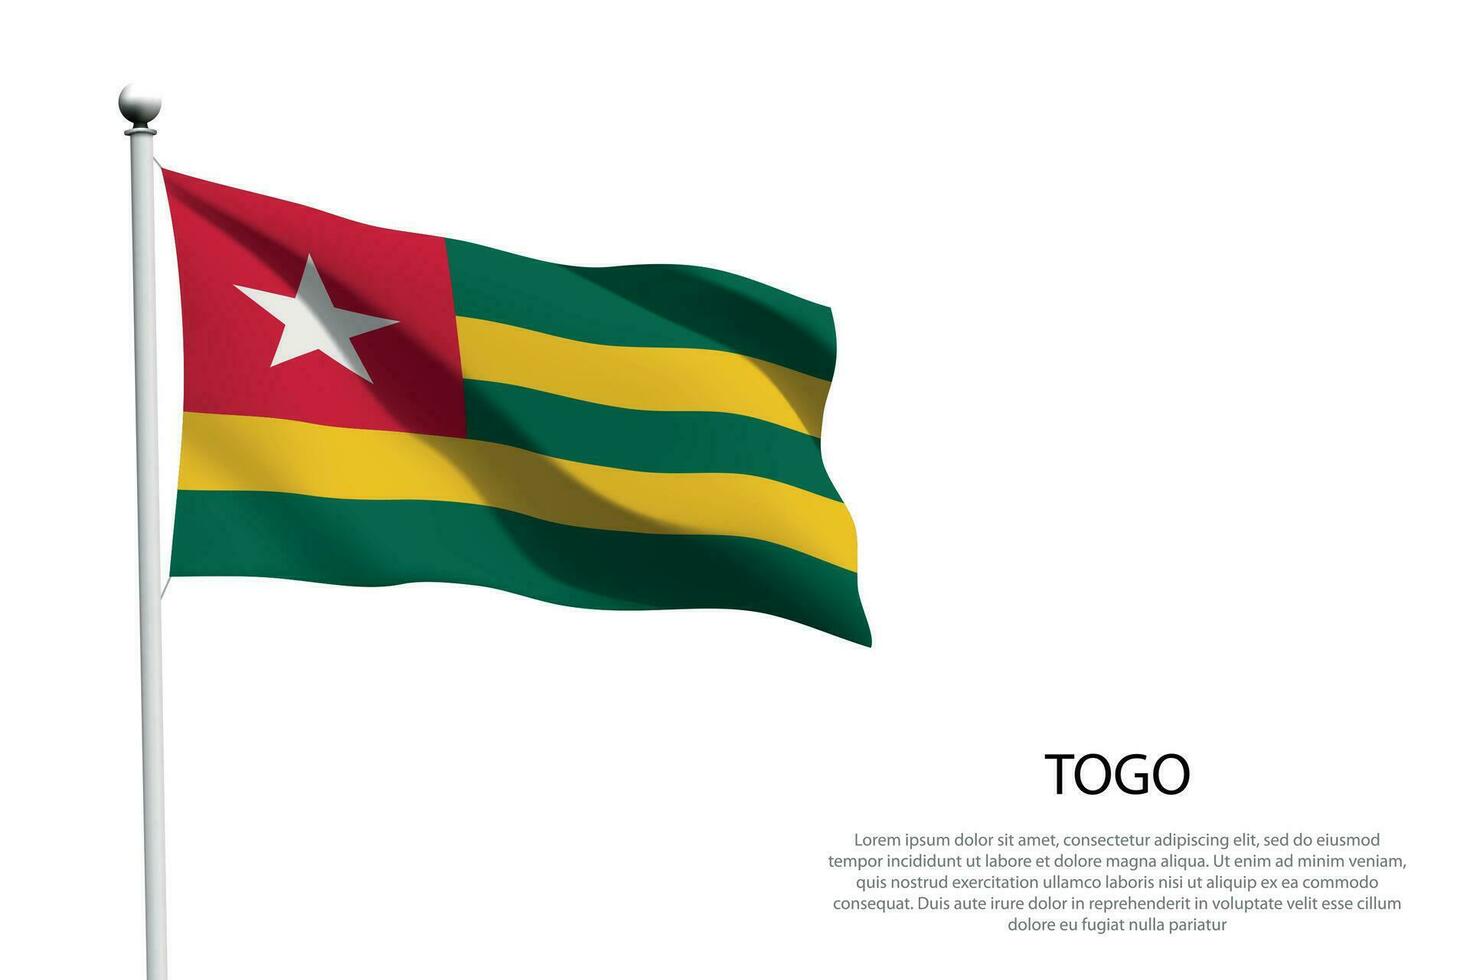 nationell flagga Togo vinka på vit bakgrund vektor